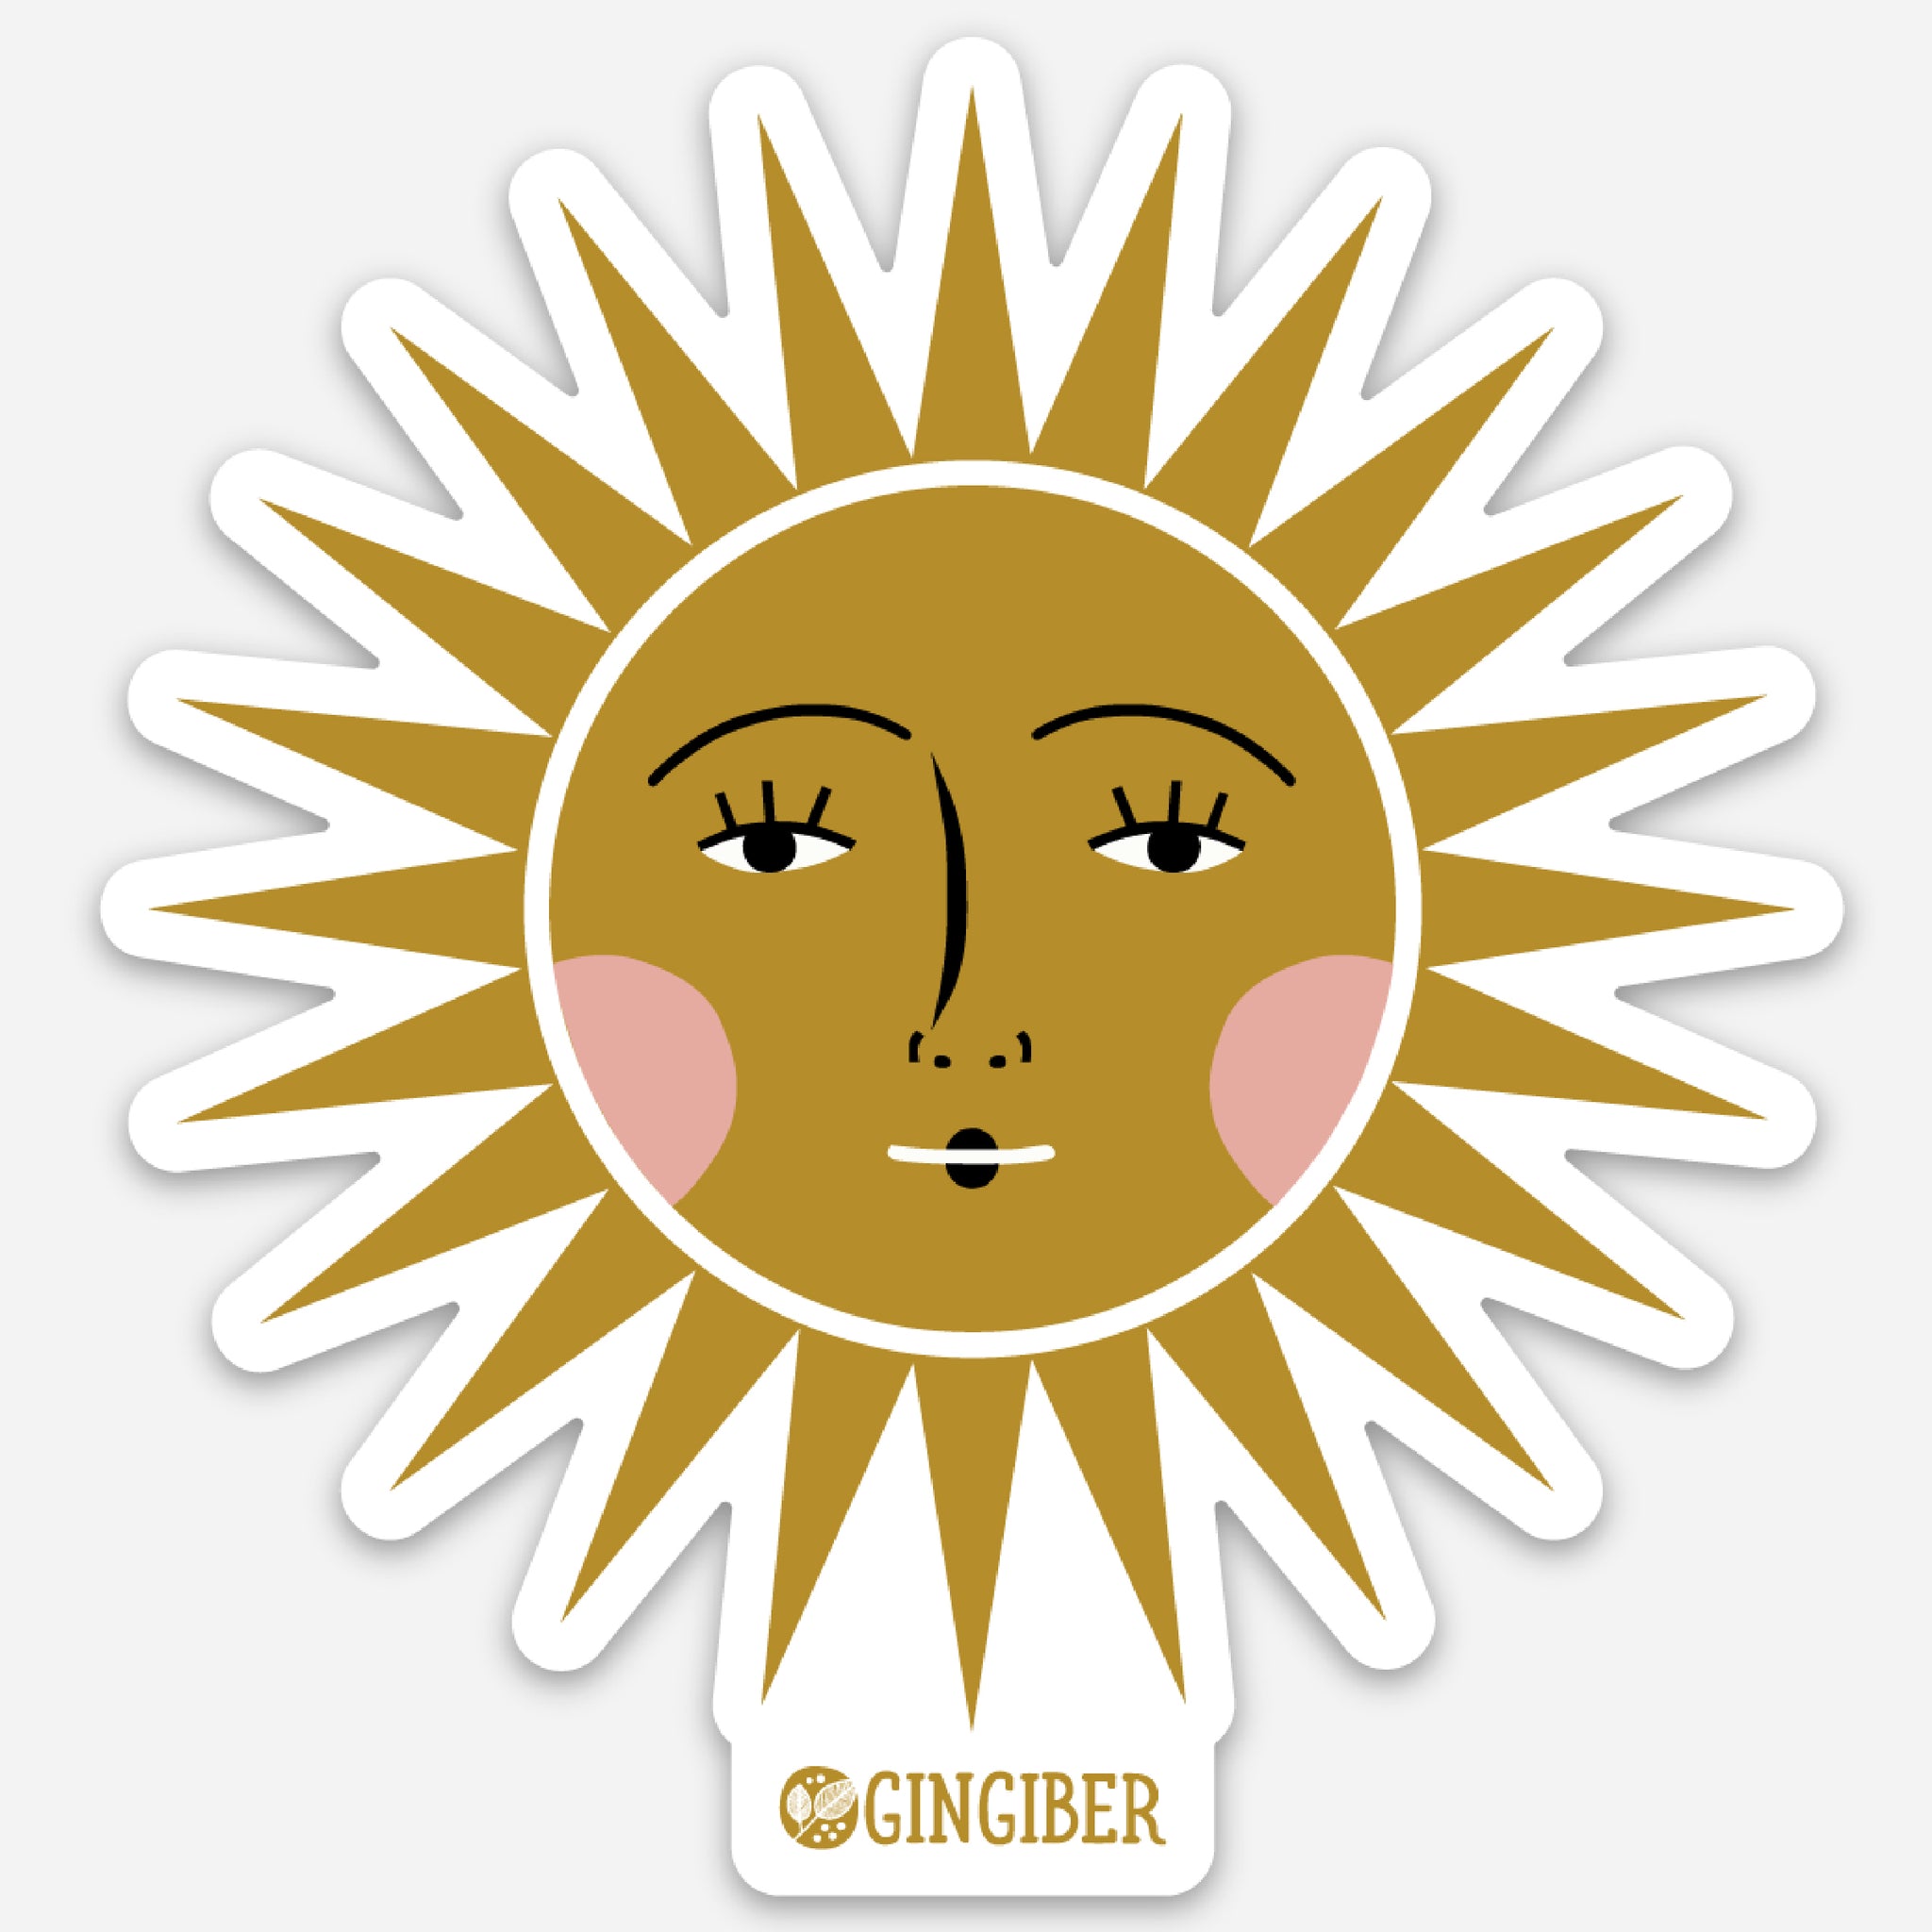 Gingham Girlies Sunshine Sticker Sheet: Craft Stickers for Kids